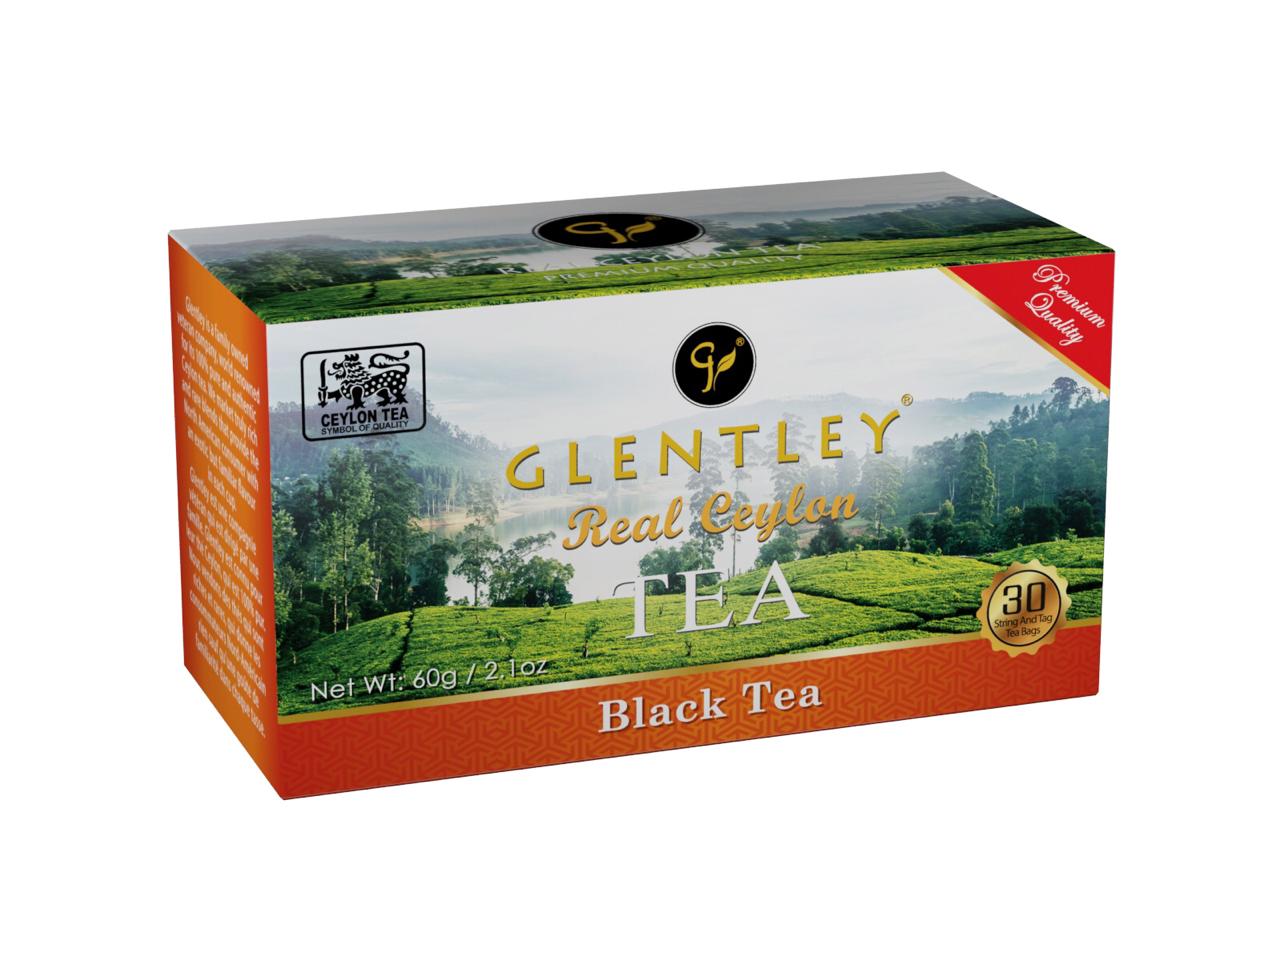 Glentley Real Ceylon Tea – Black Tea